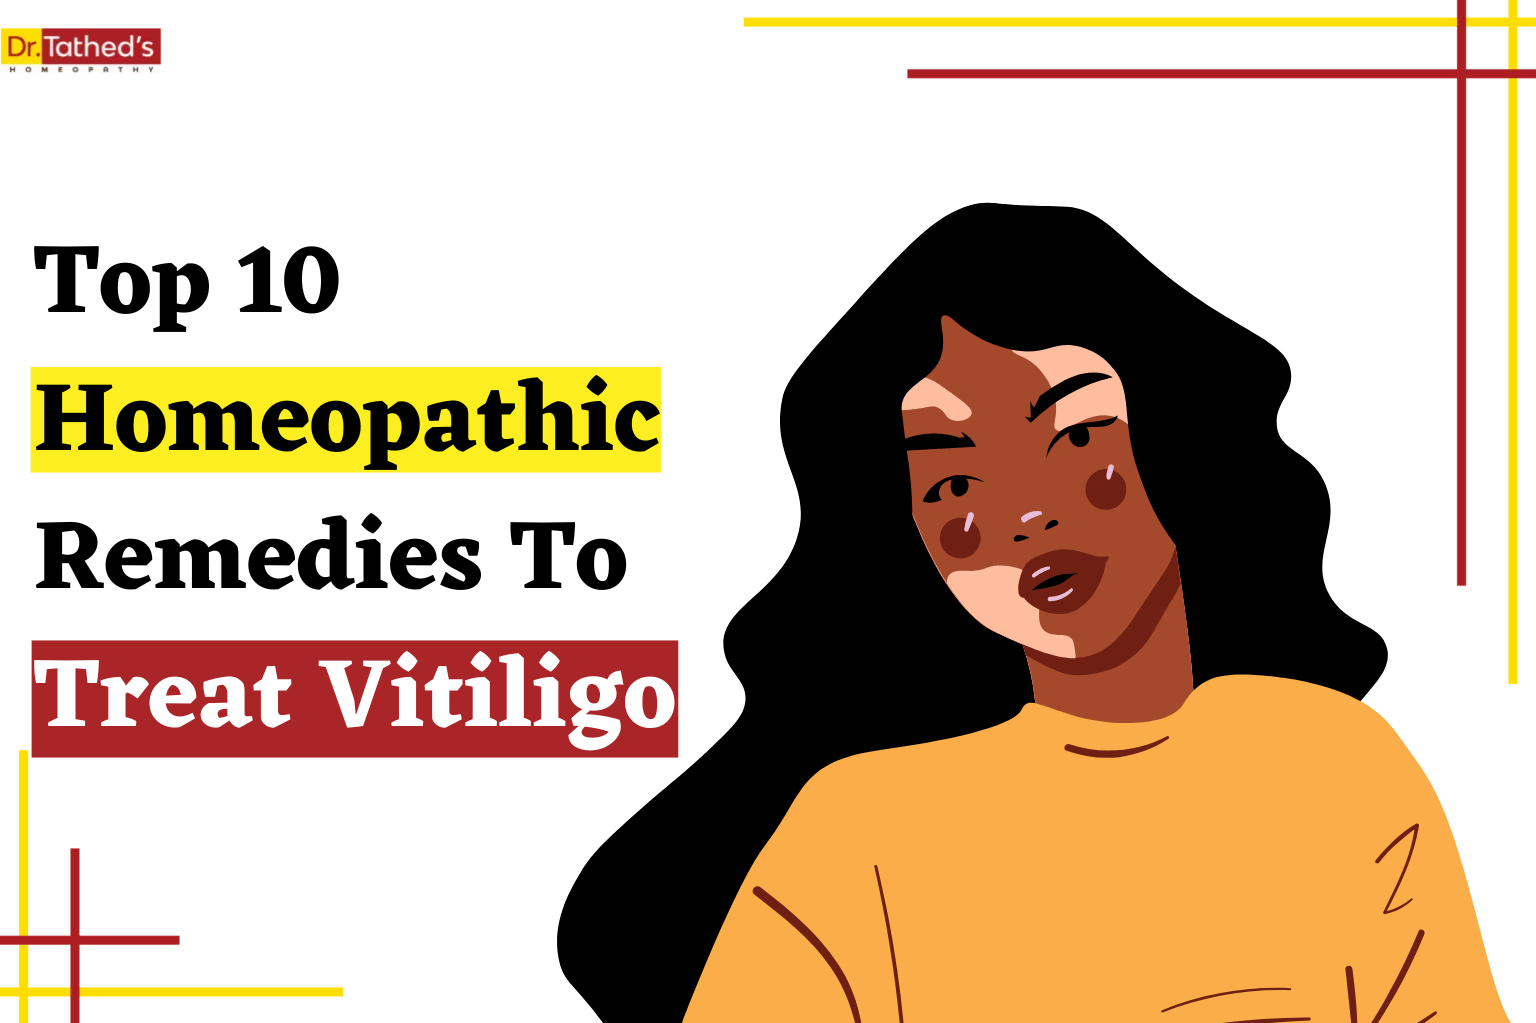 Top 10 Homeopathic Remedies To Treat Vitiligo